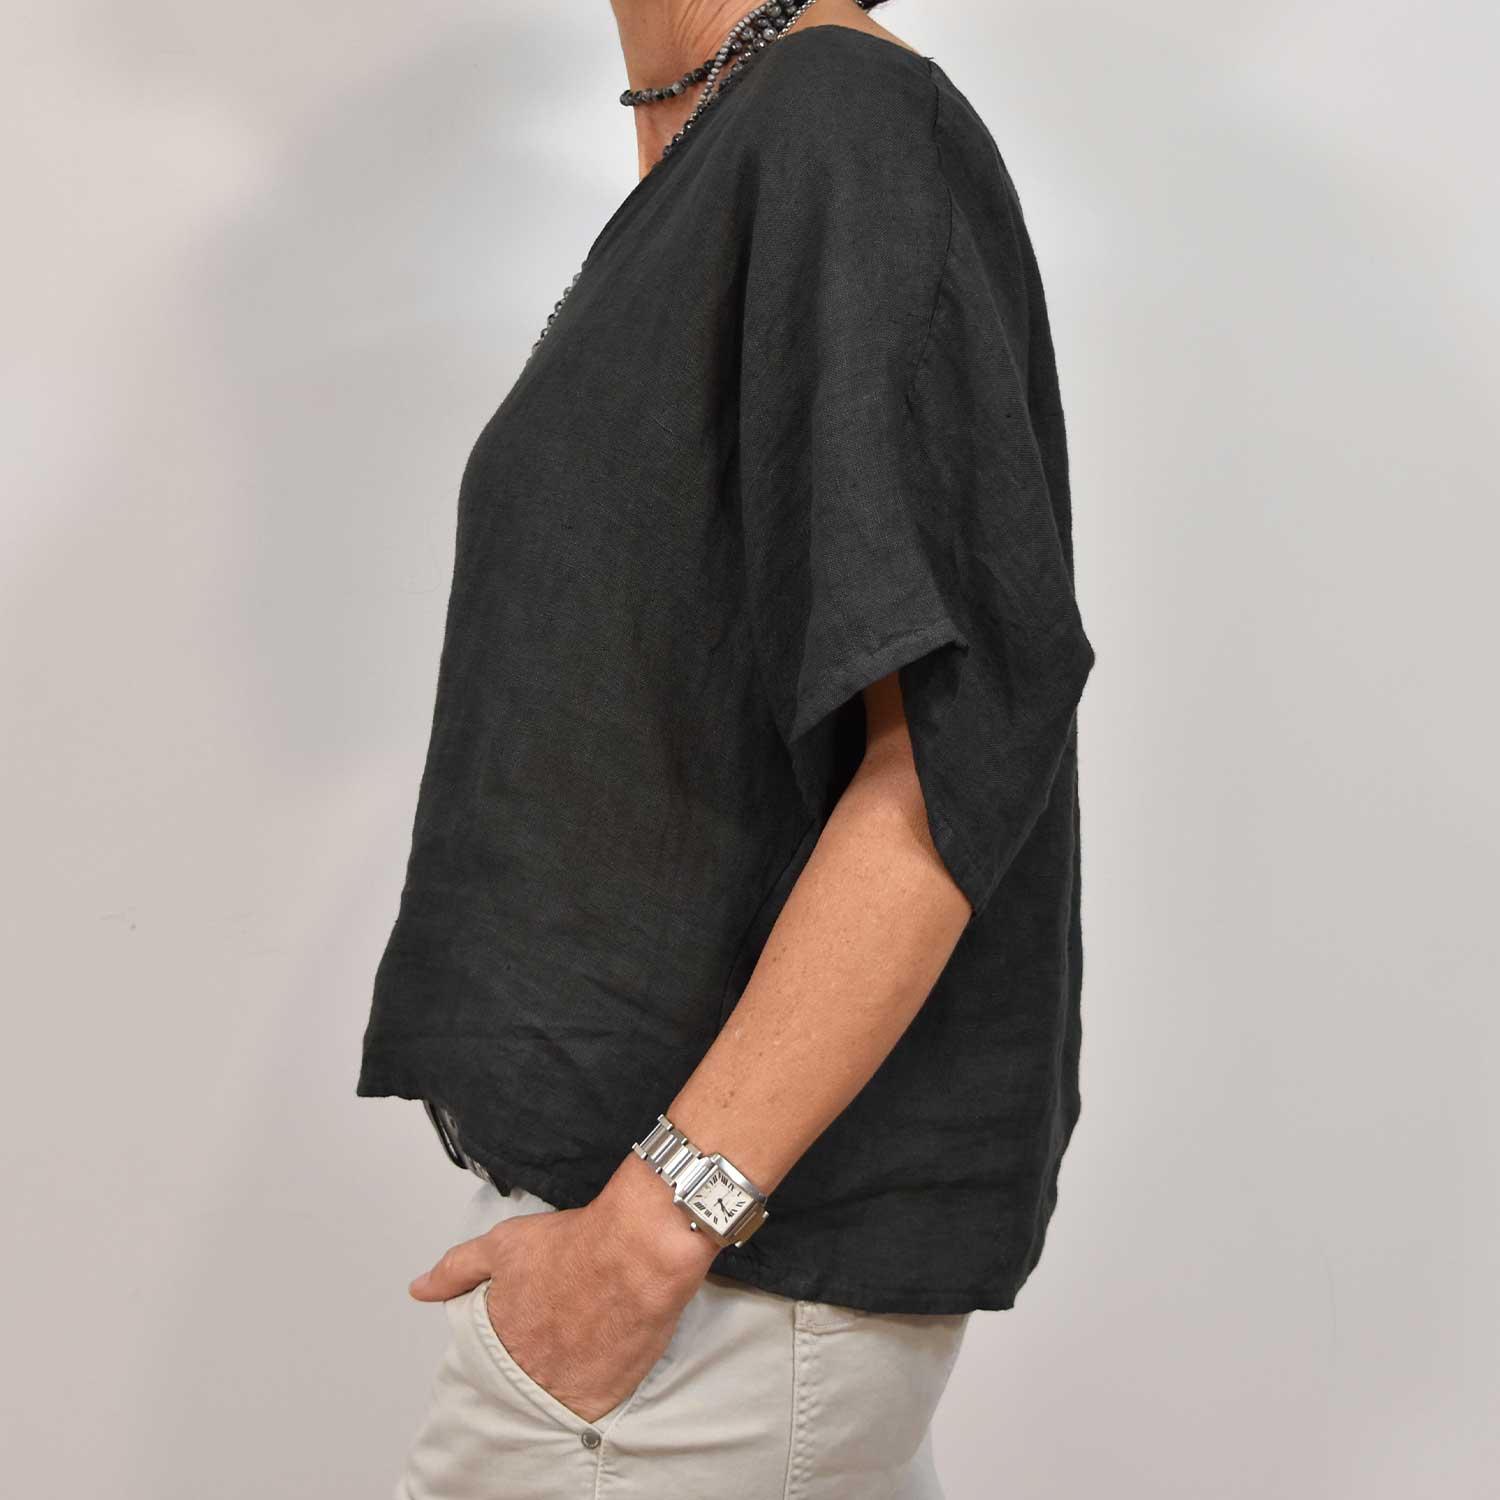 Grey V-neck linen blouse